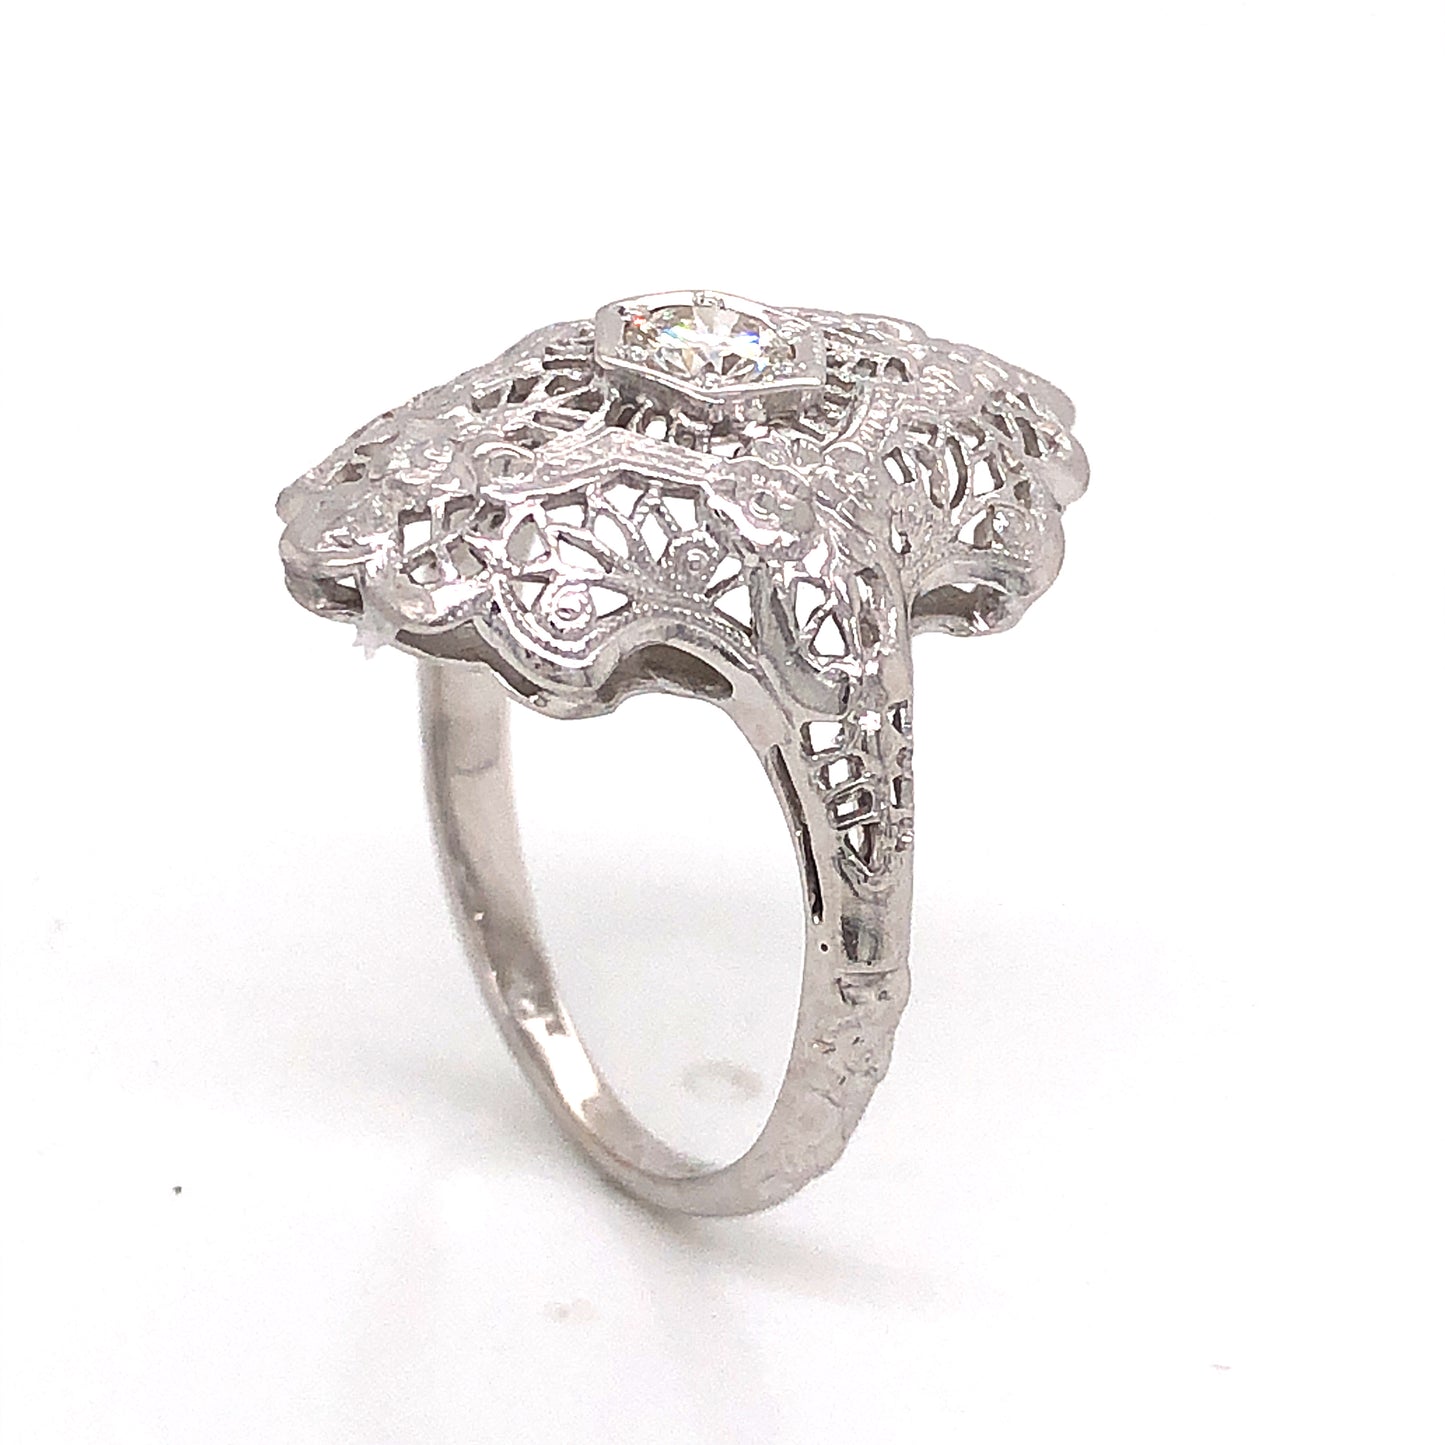 Art Deco Inspired Diamond Filigree Cocktail Ring in 14k White Gold